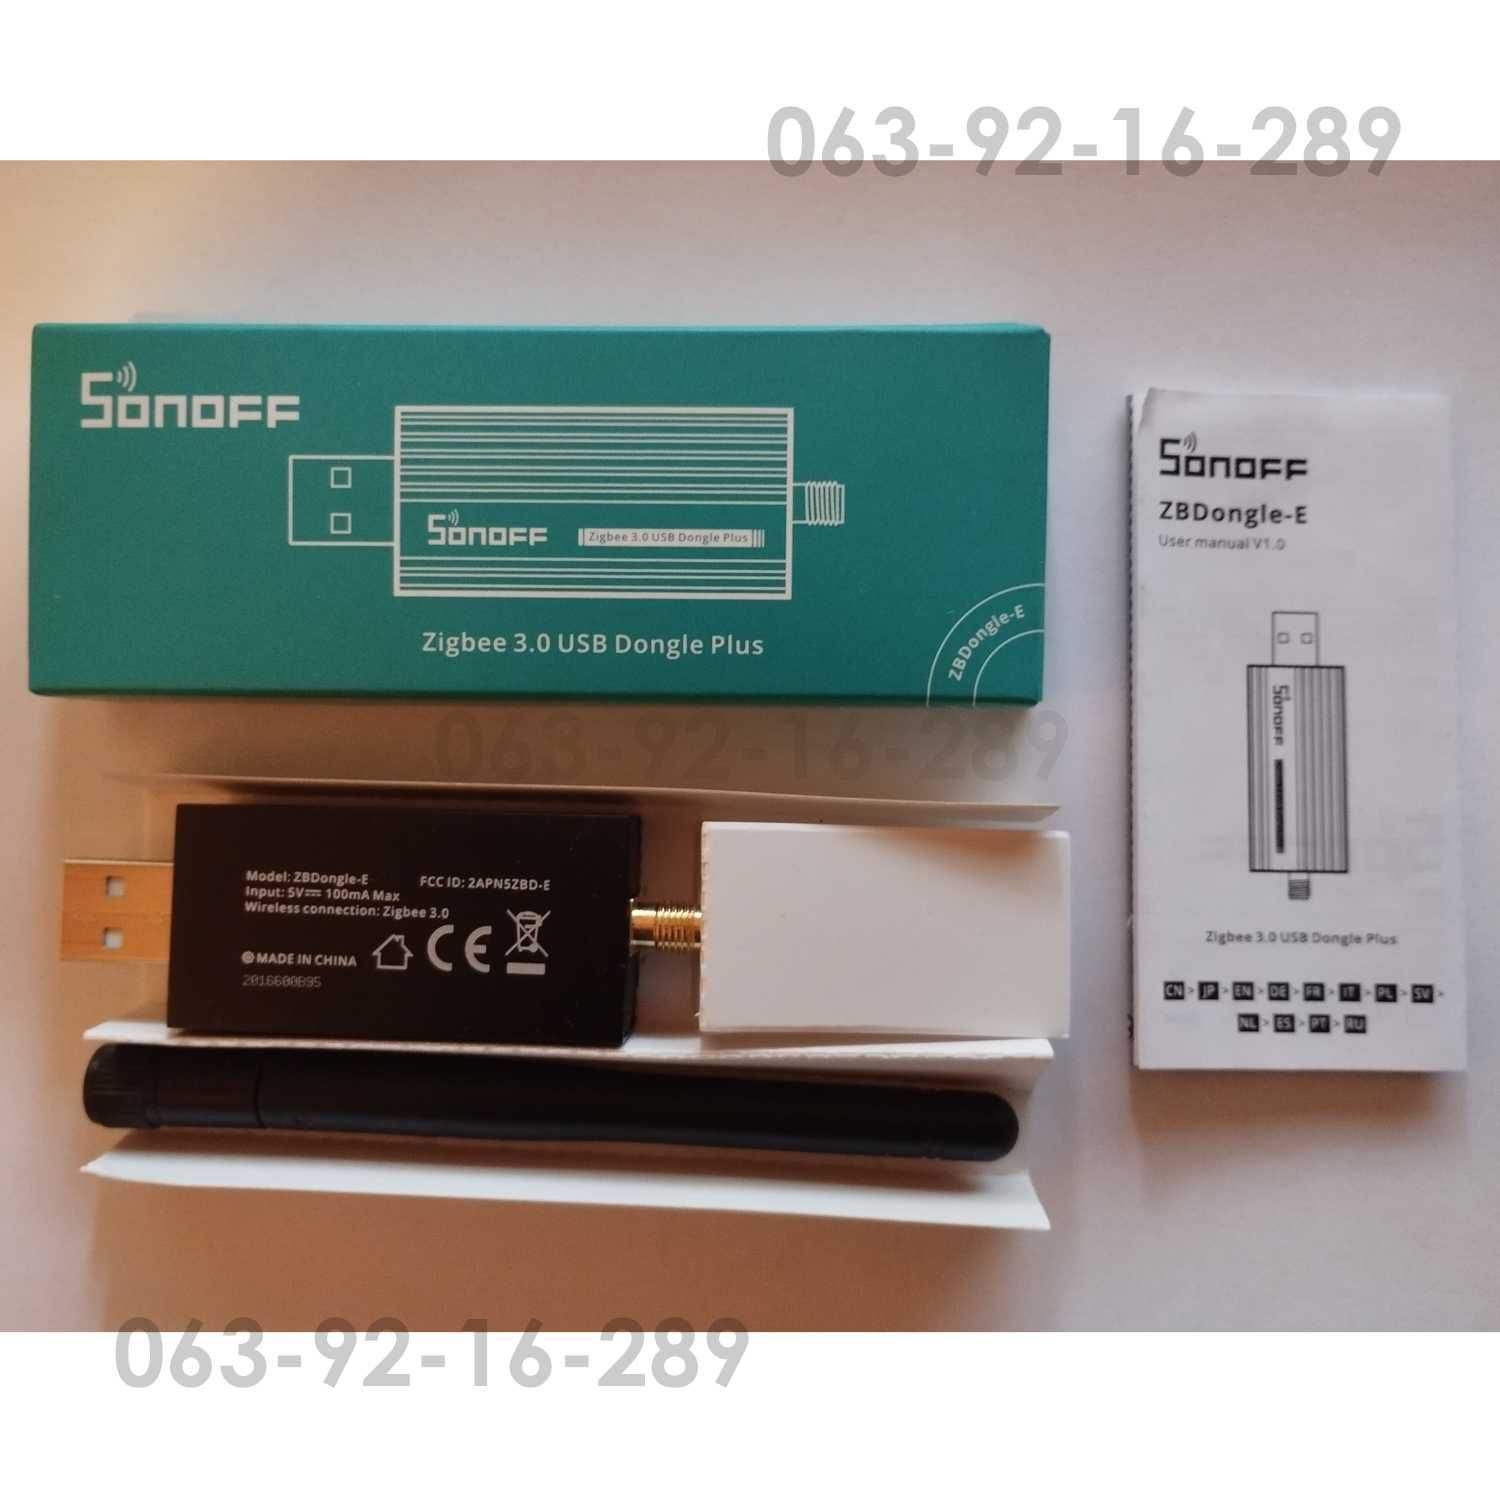 Координатор стік SONOFF ZBDongle-E Zigbee 3.0 USB Dongle Plus-E